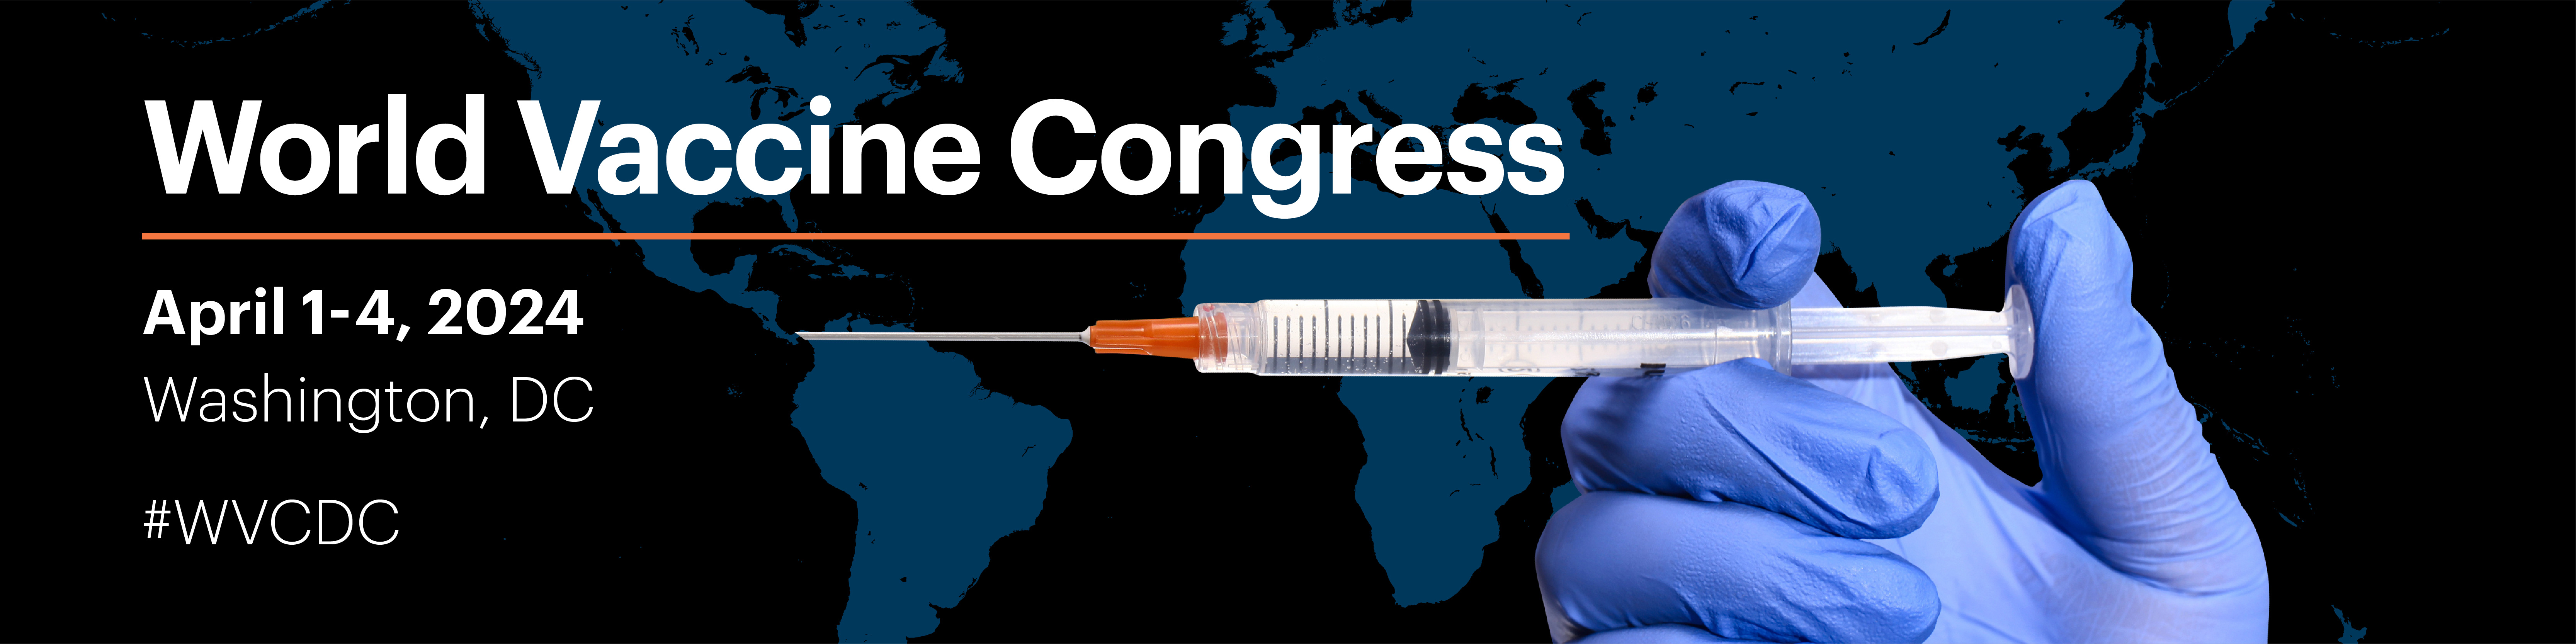 World Vaccine Congress 